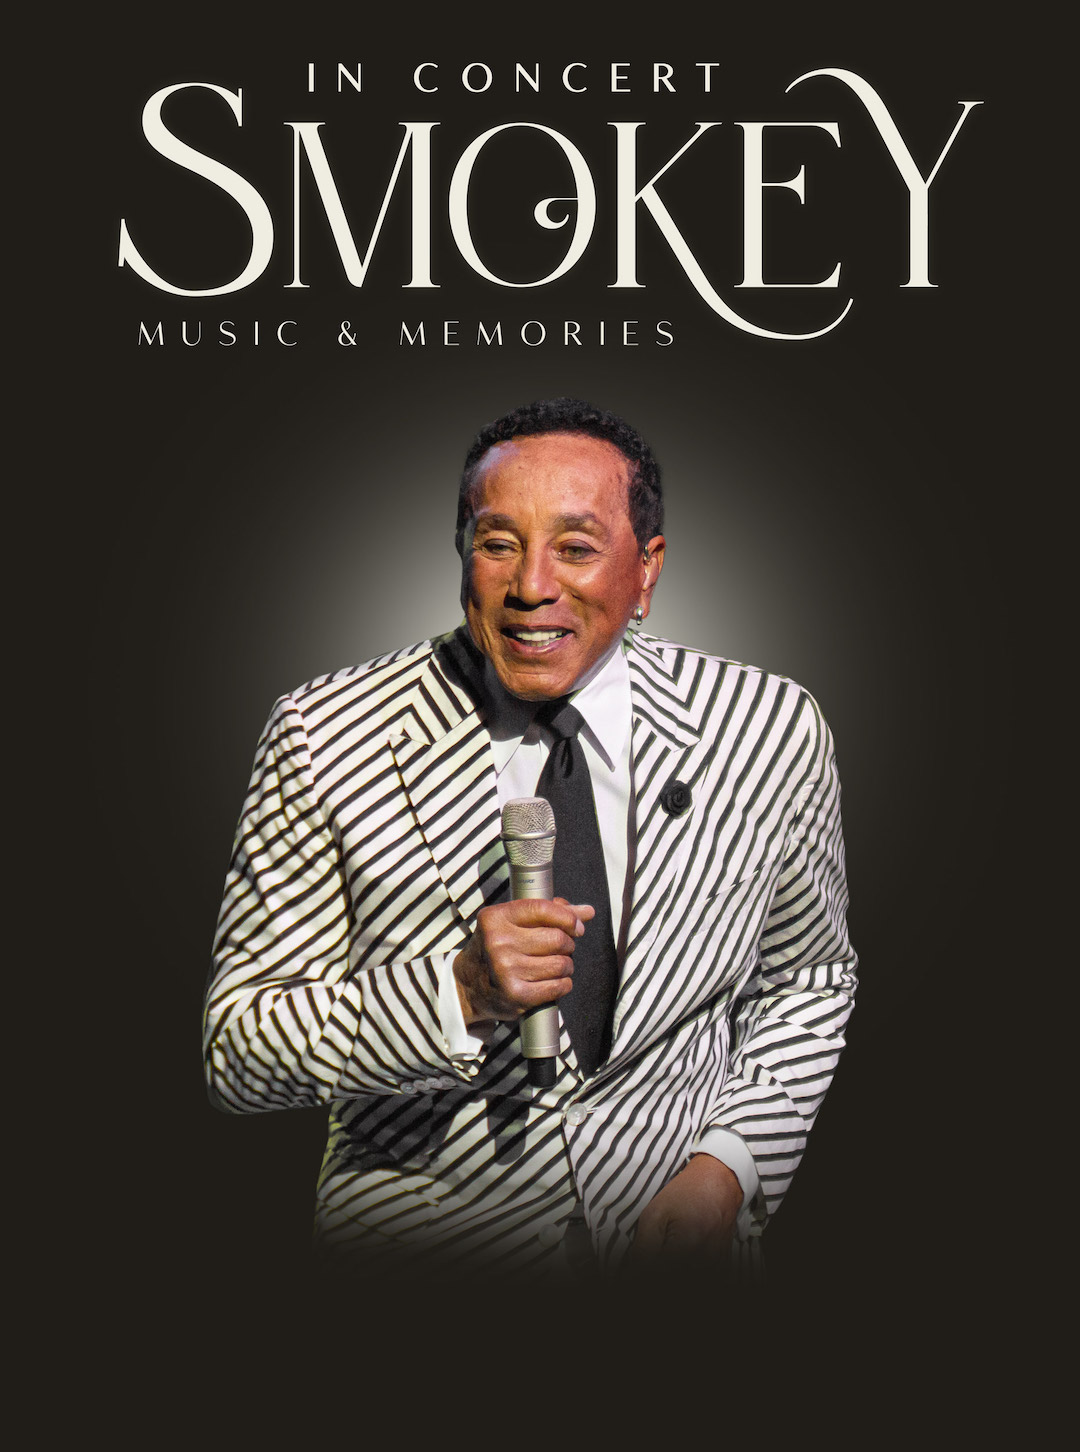 `Smokey Robinson In Concert: Smokey Music & Memories` image courtesy of Fallsview Casino